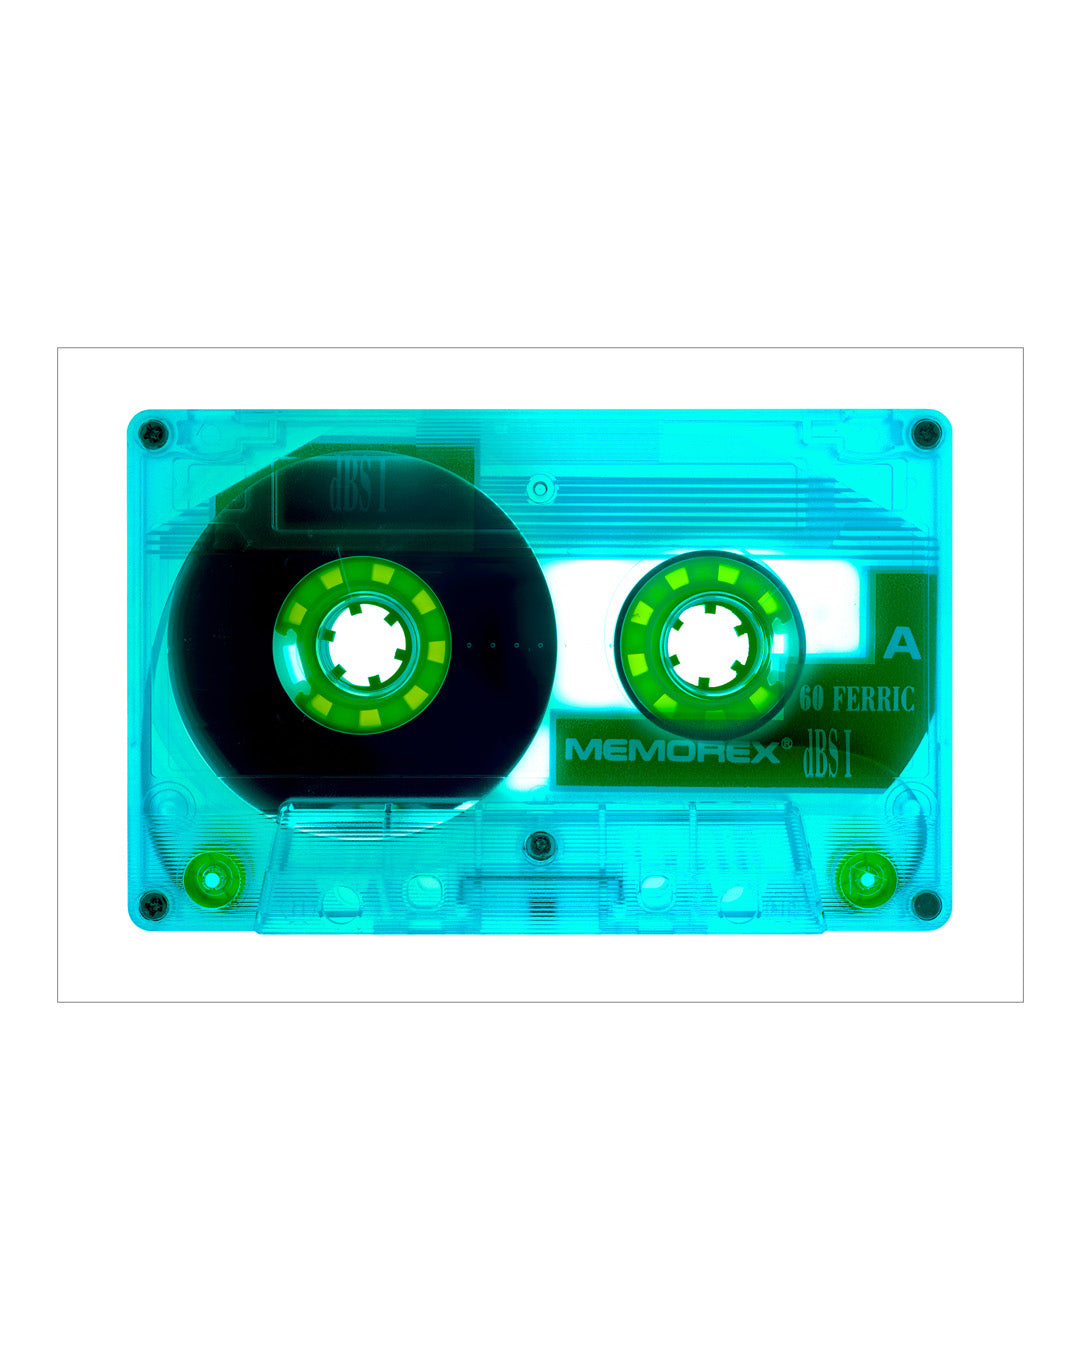 Tape Collection ‘Ferric 60 (Aqua)’, 2021